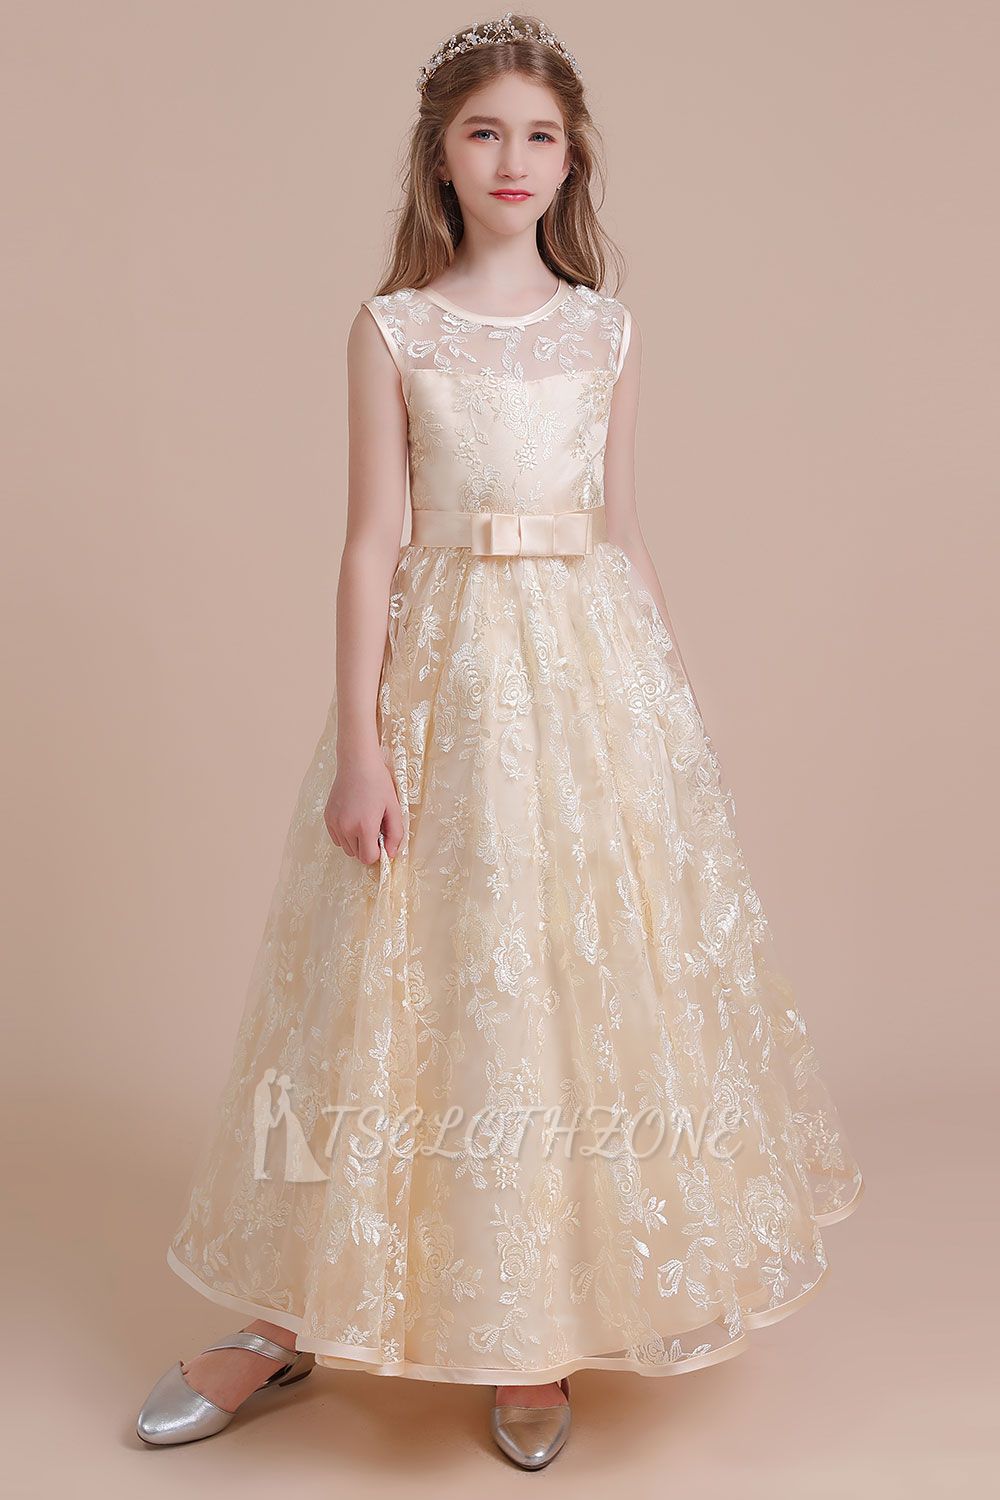 Discount Tulle A-line Flower Girl Dress | Charming Lace Little Girls Pegeant Dress Online